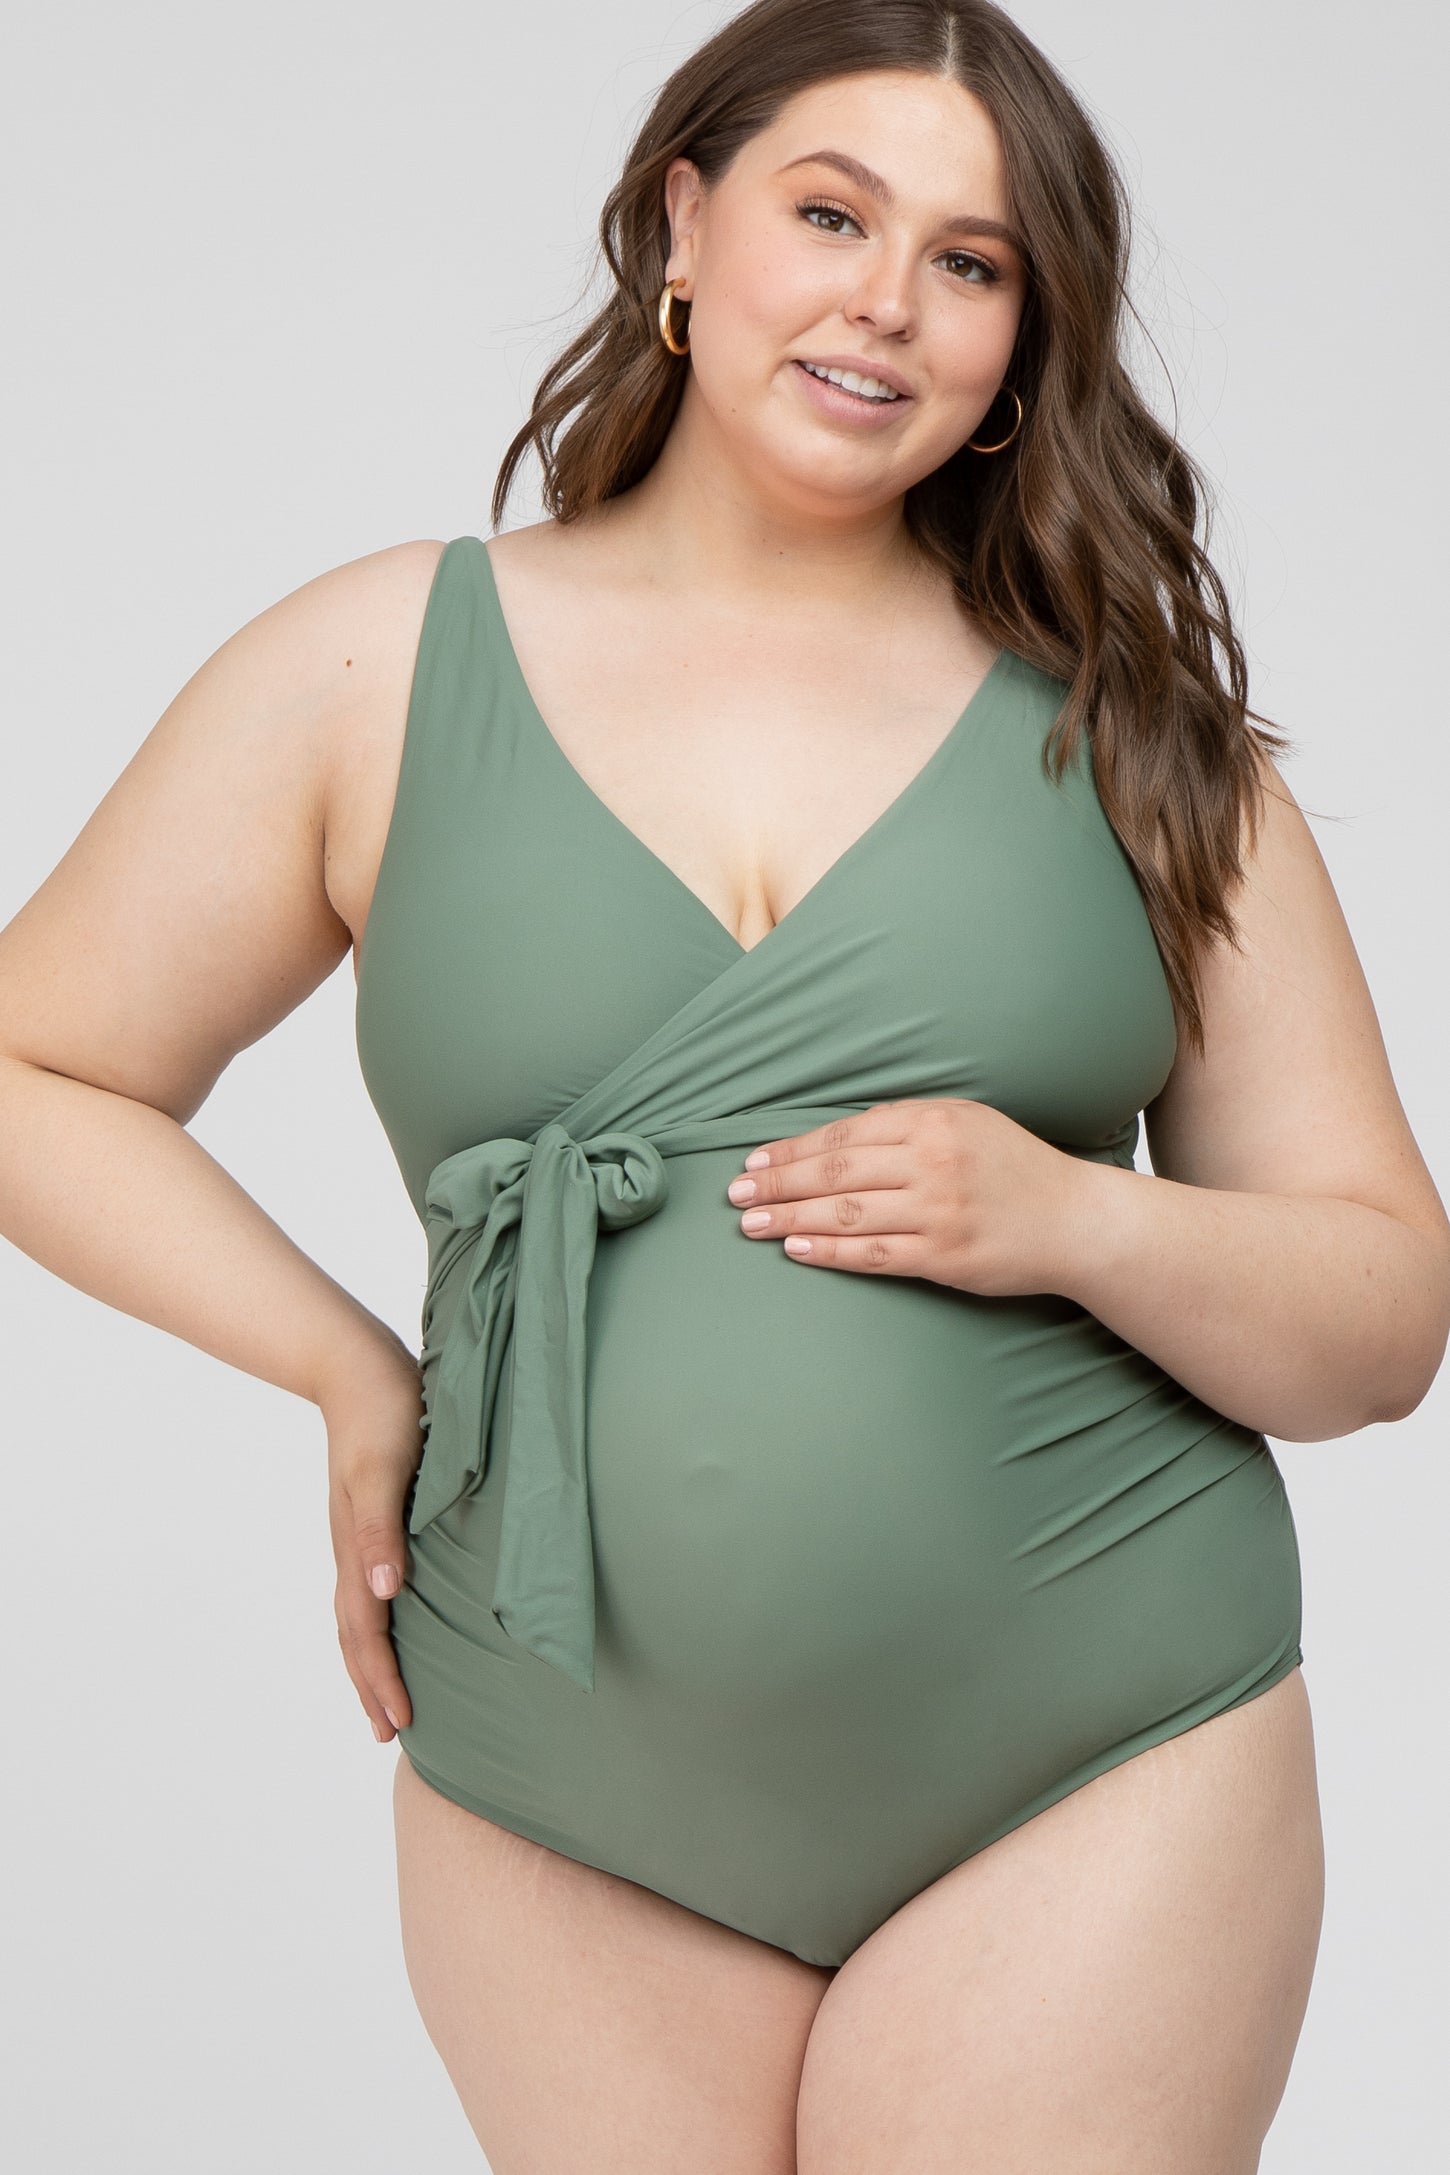 Best Deal for Womens Brazillan Bikini,Plus Size Maternity Swimwear Navy